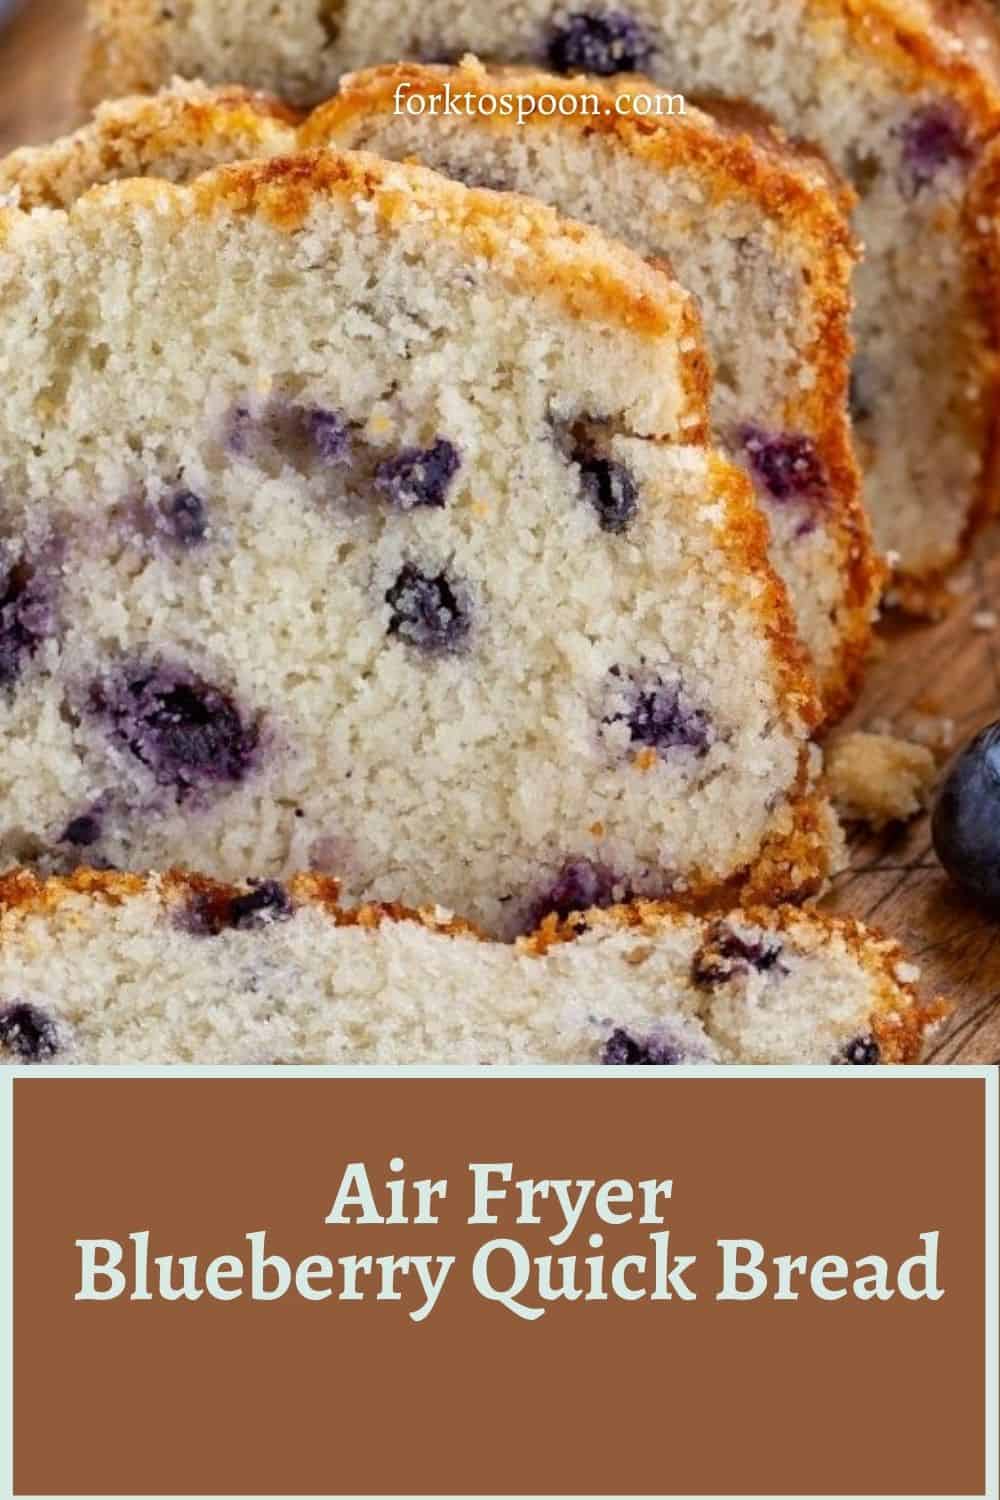 Air Fryer Blueberry Quick Bread